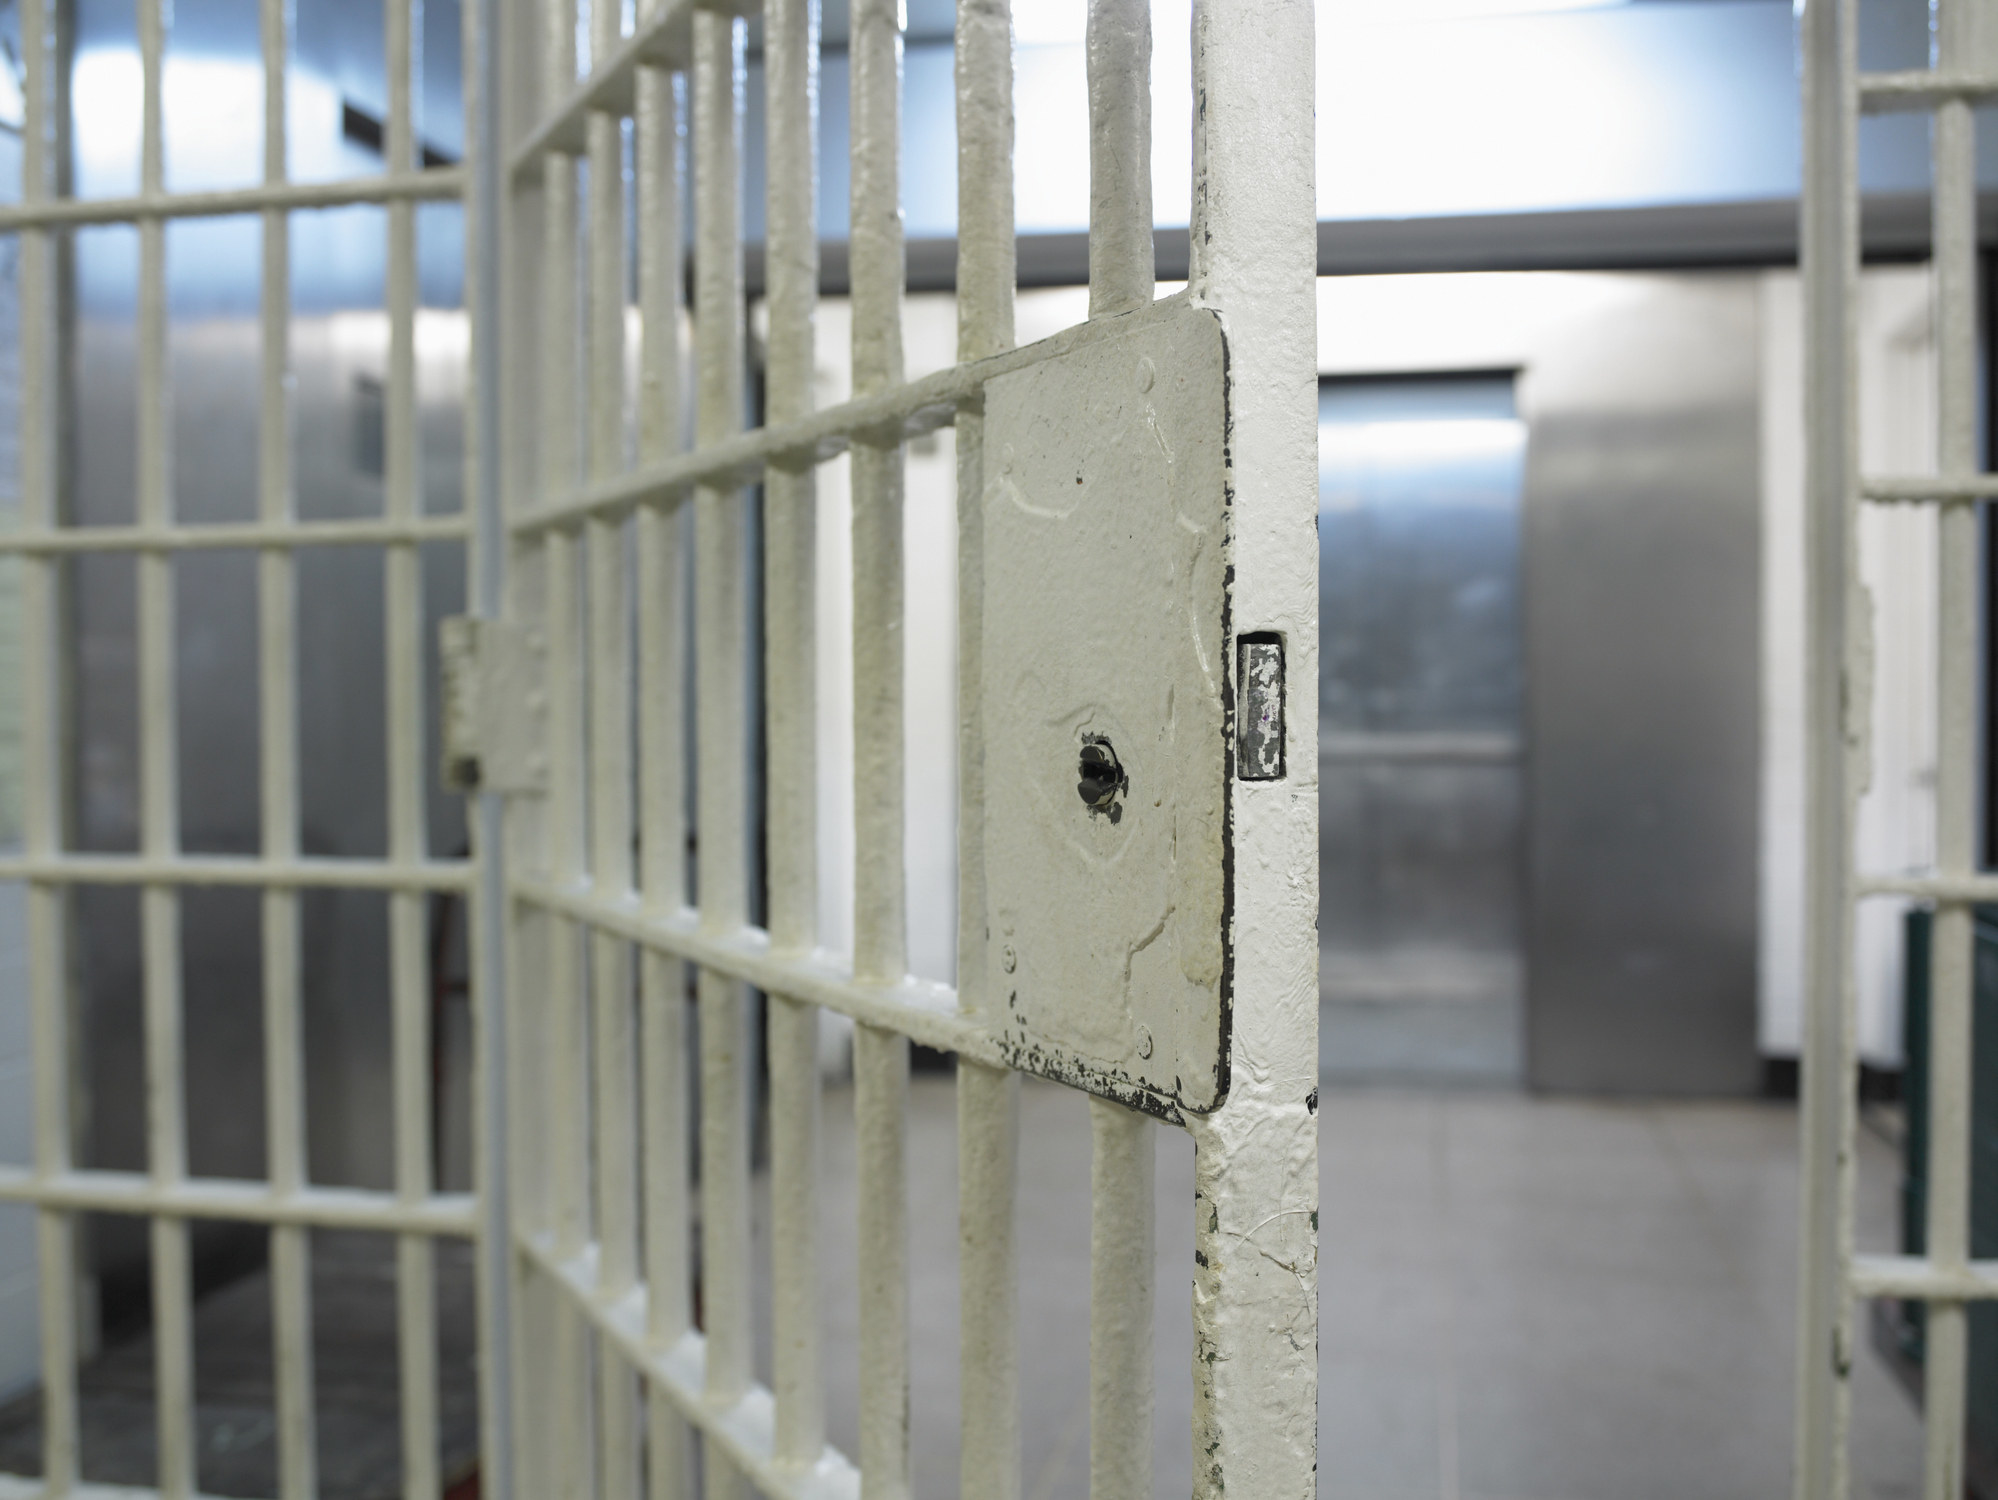 Rusty prison bars in an open prison cell